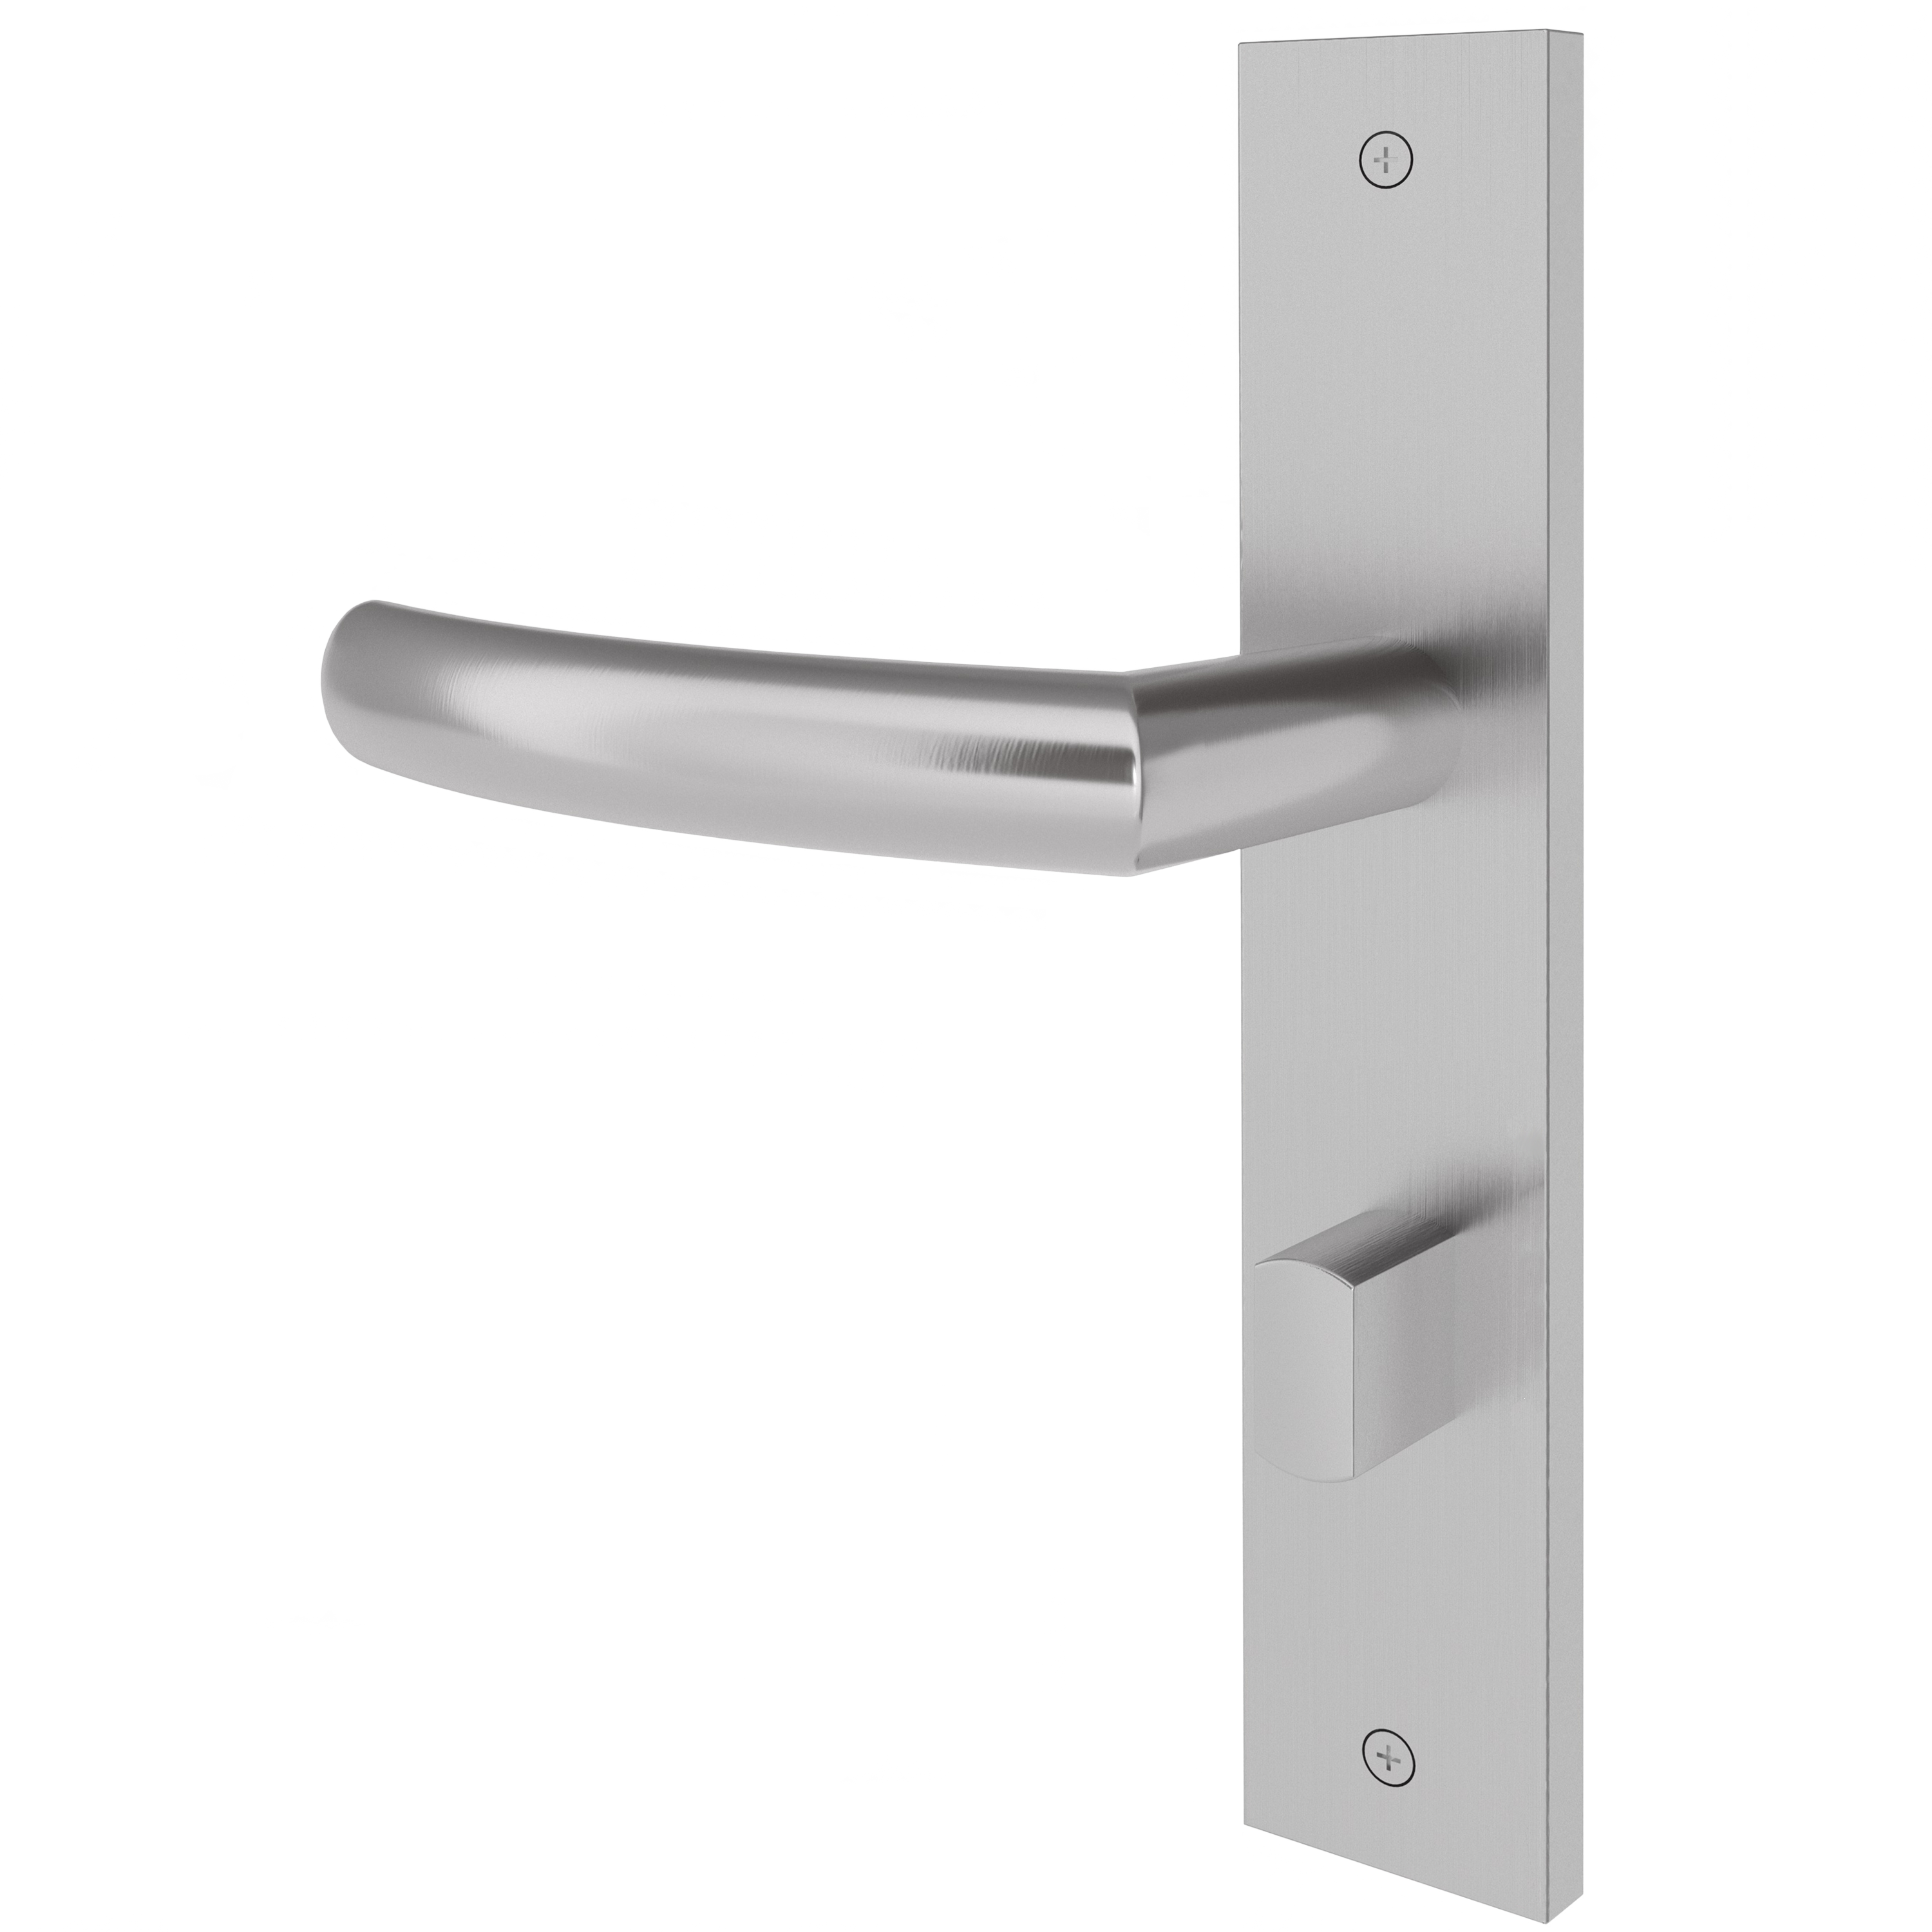 Langschildgarnitur eckig L-Form gebogen Modell Amaraya Edelstahl geschraubt Klasse 1